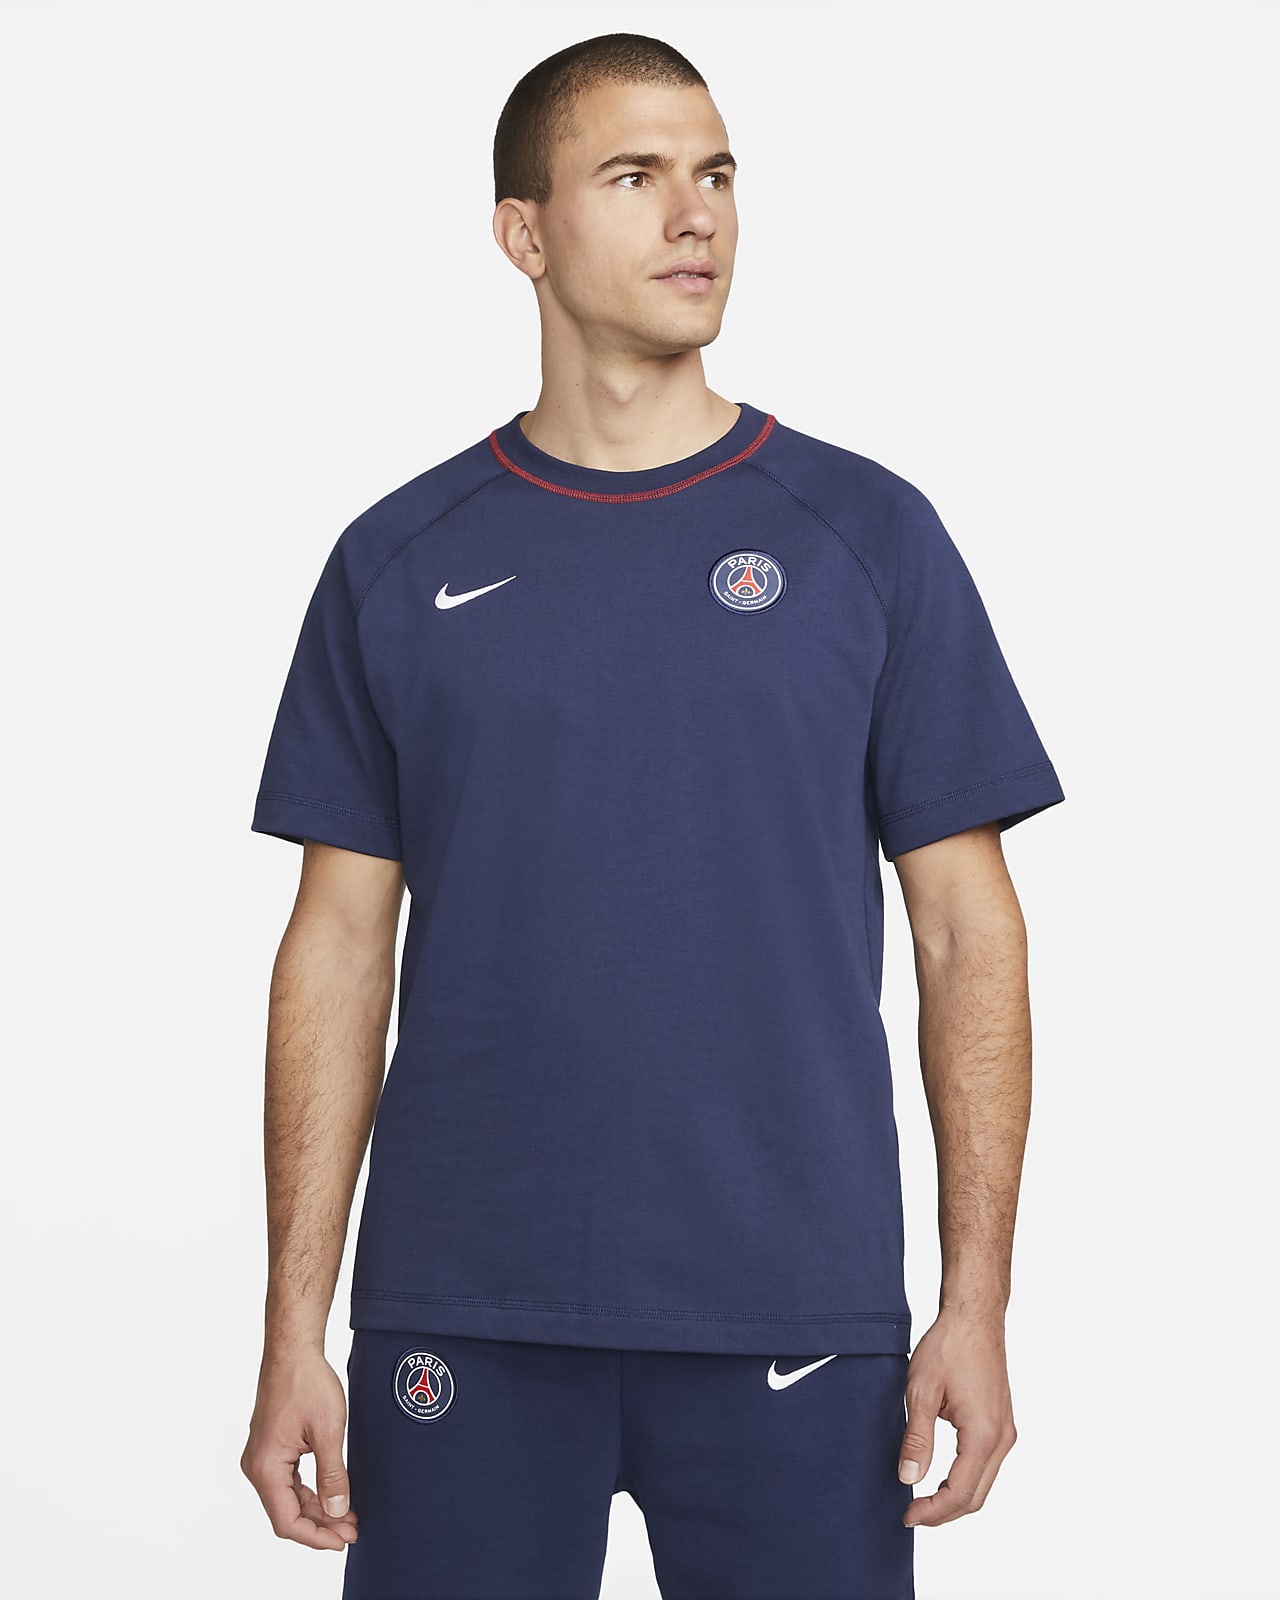 Saint-Germain Men's Short-Sleeve Soccer Top. Nike.com